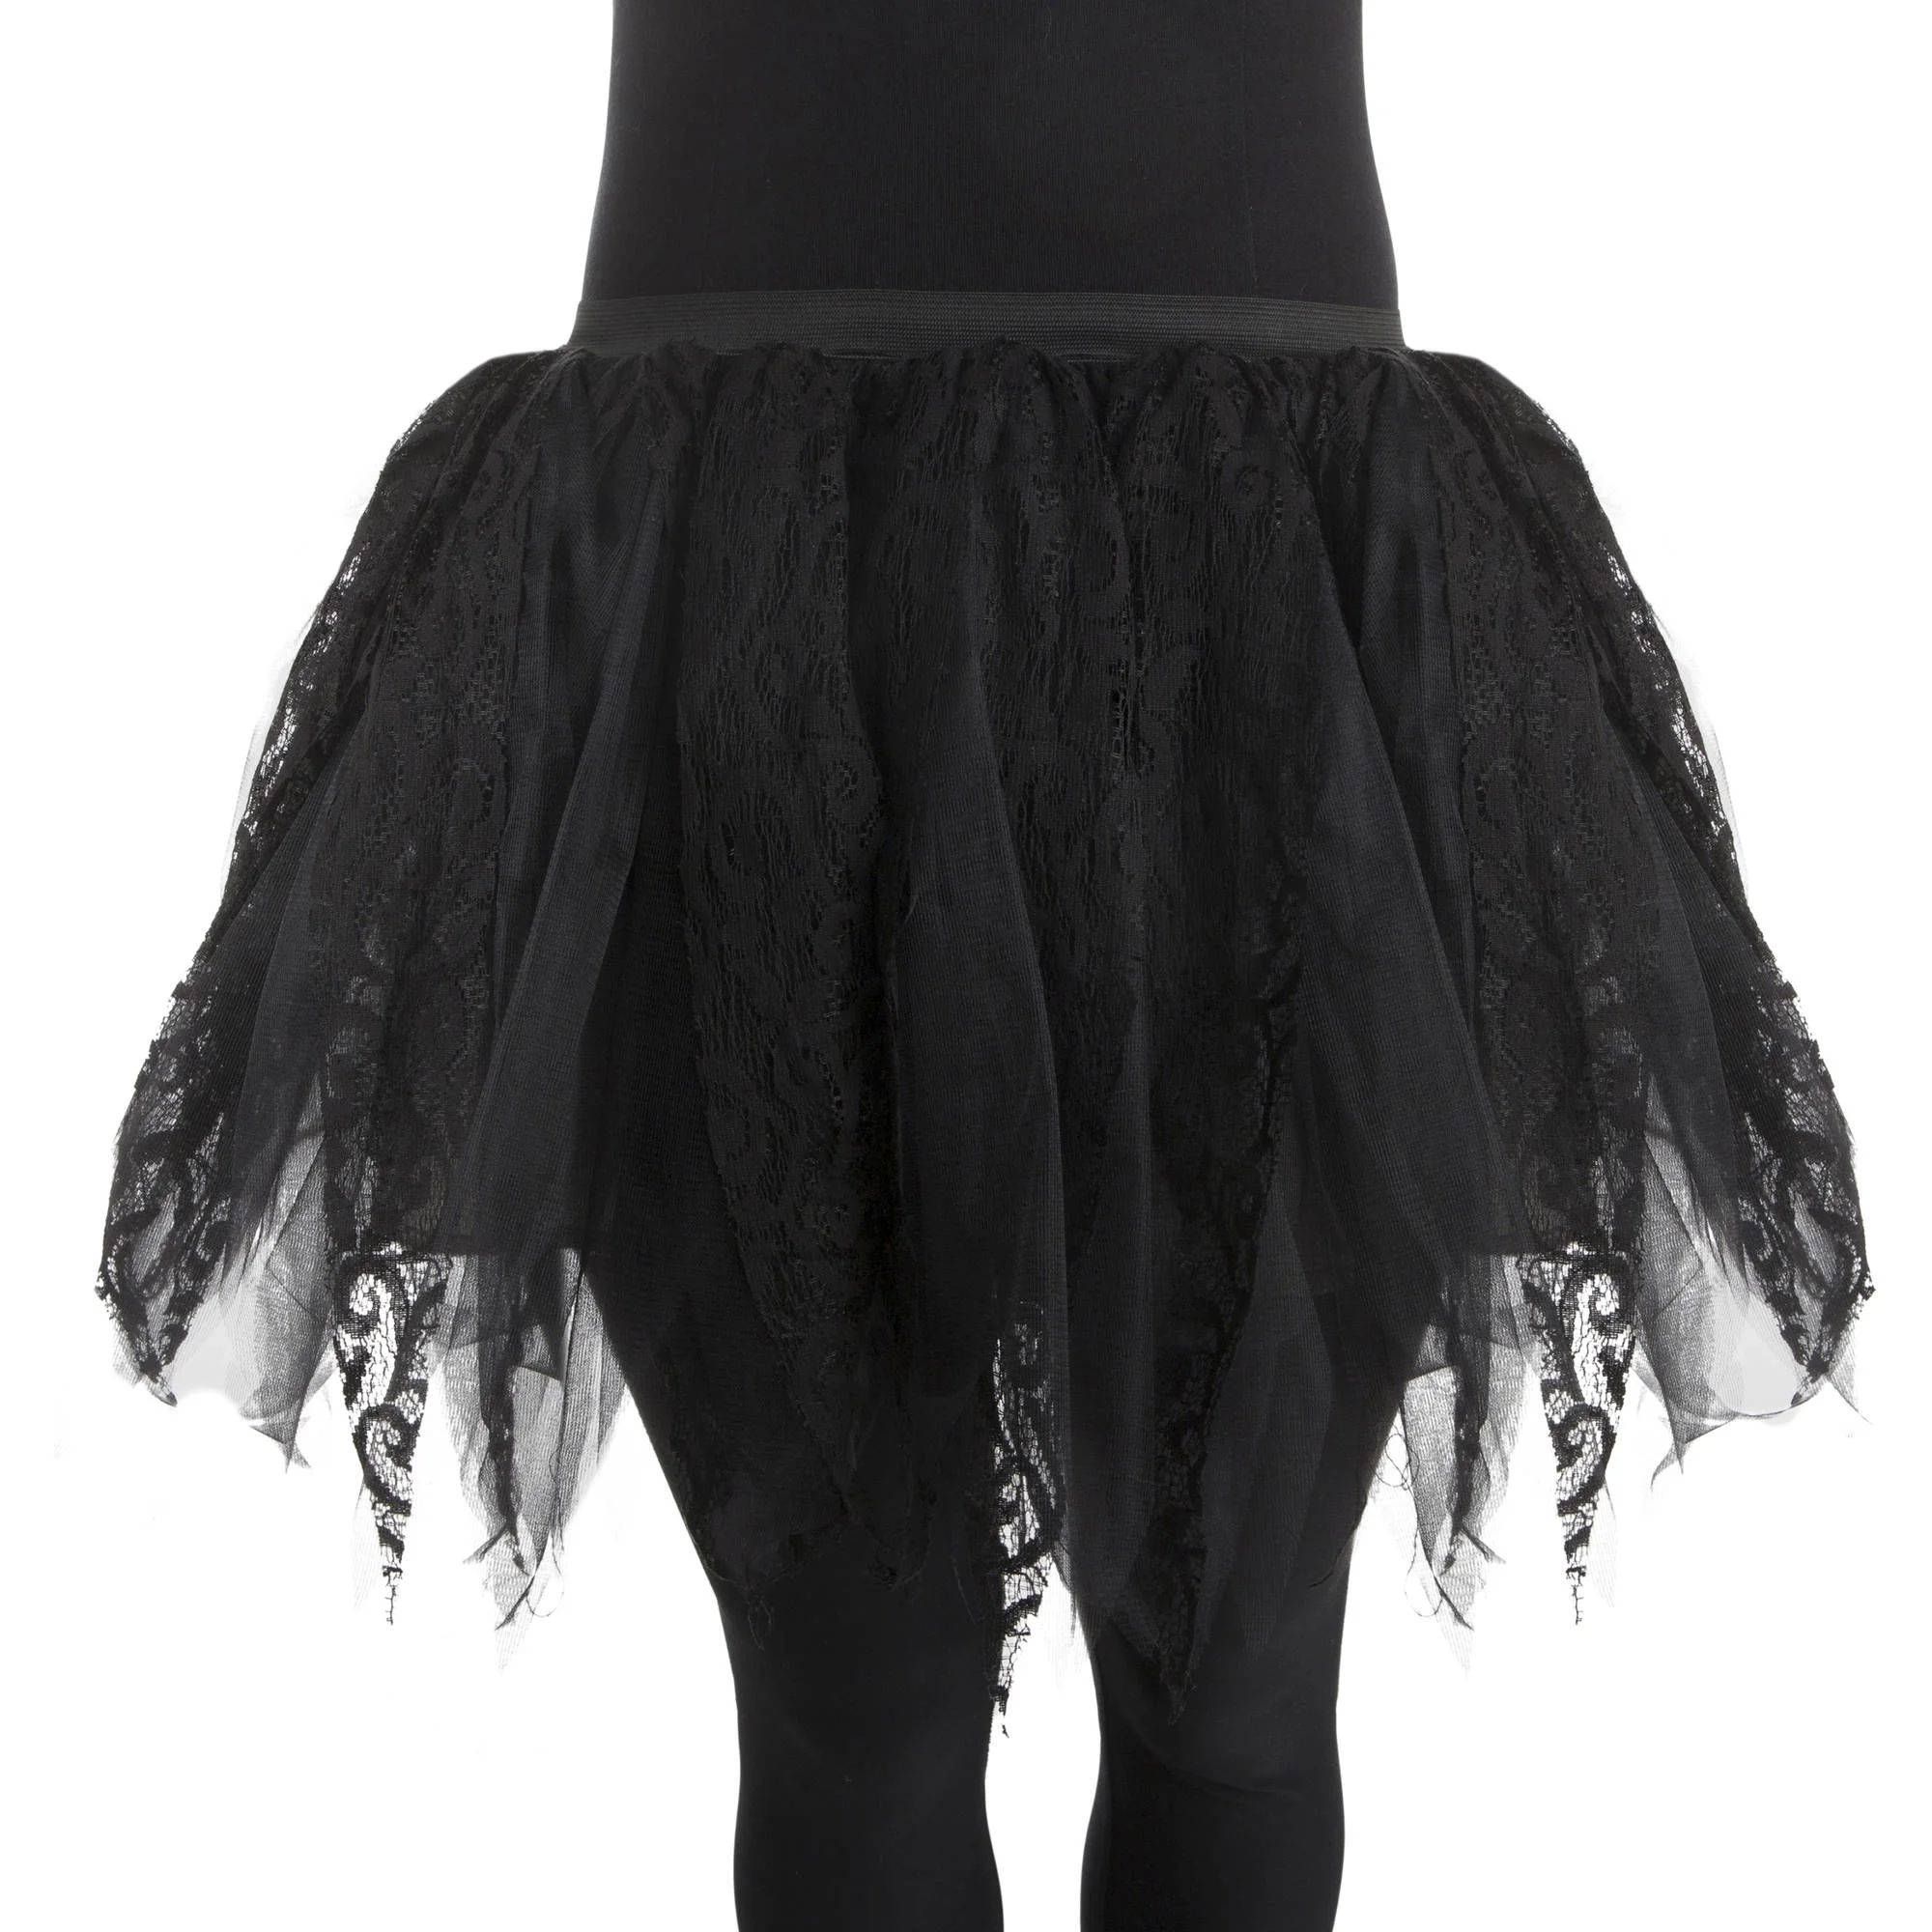 Way To Celebrate Halloween Women’s Lace Tutu, Black, L/XL | Walmart (US)